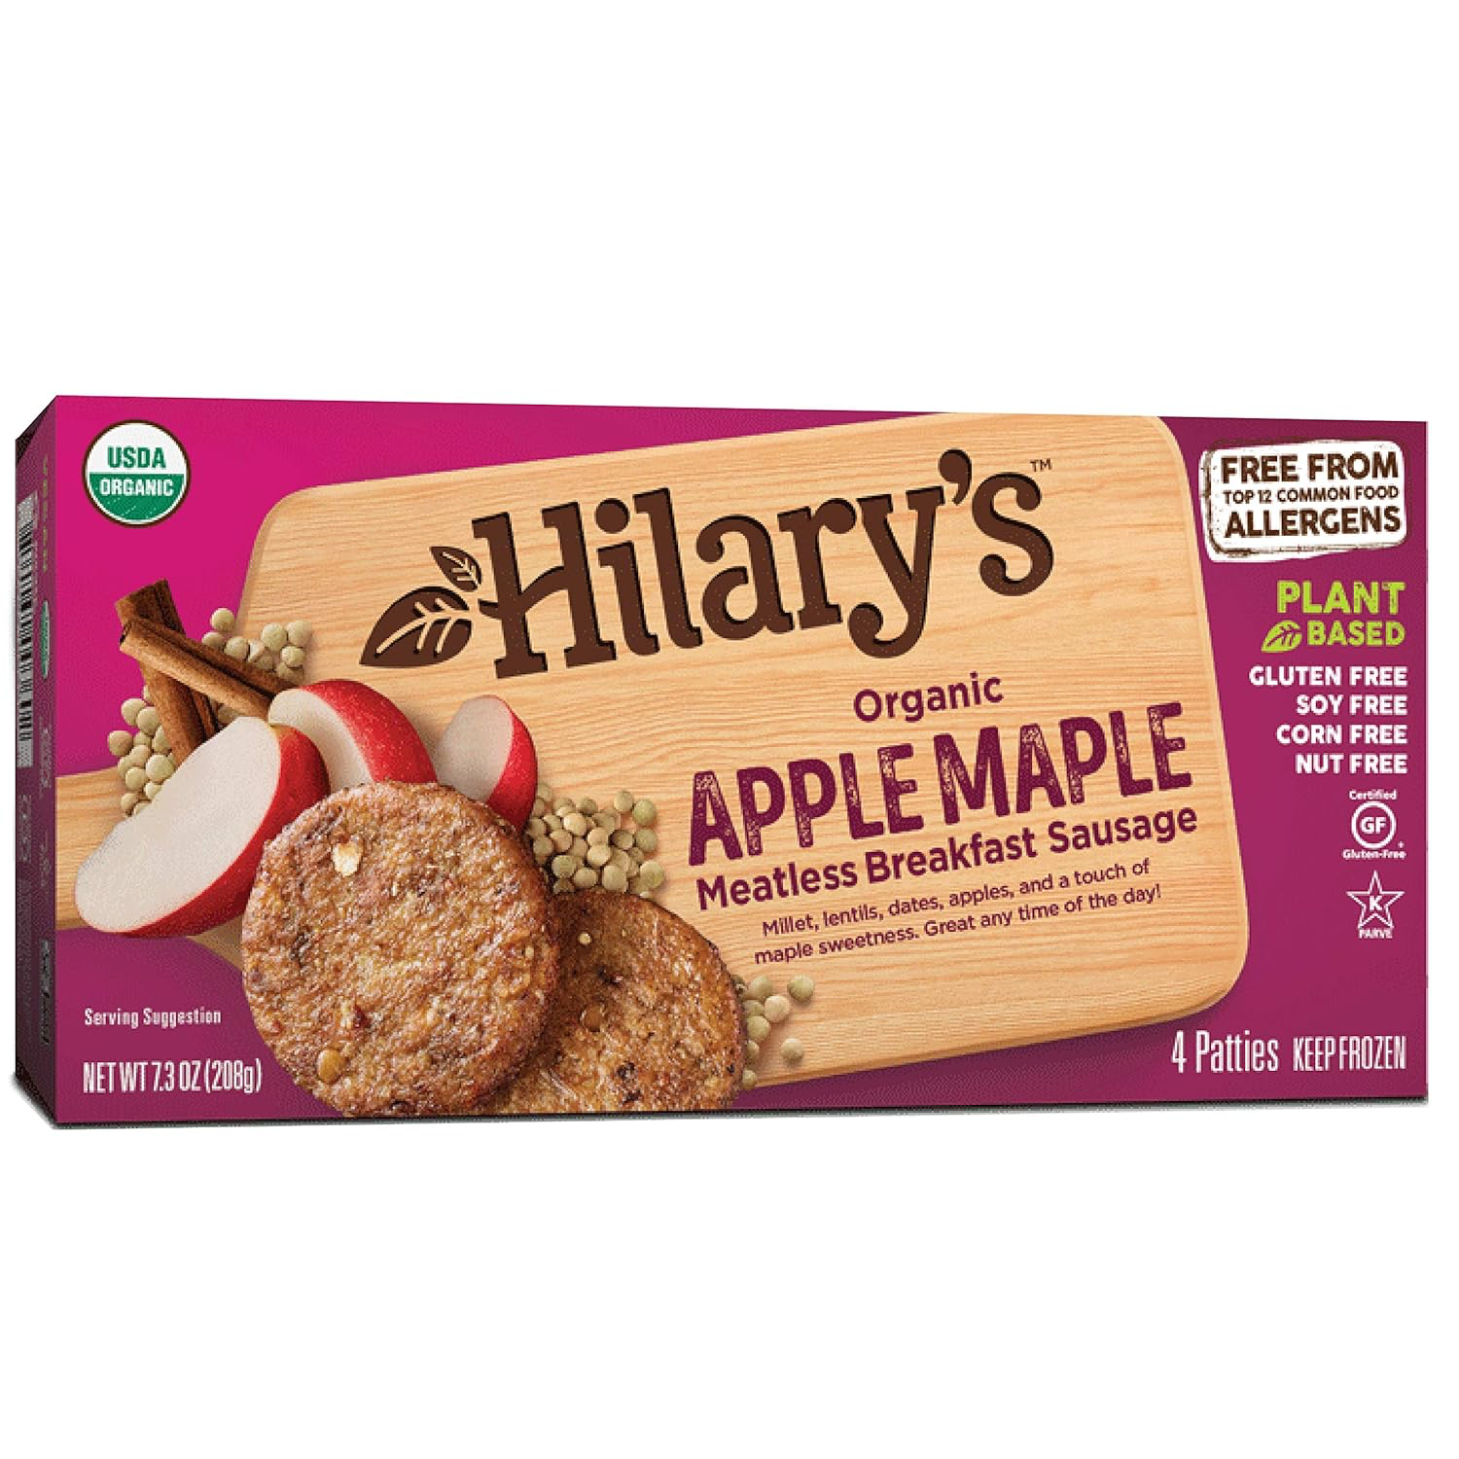 Hilary’s Organic Apple Maple Meatless Breakfast Sausage